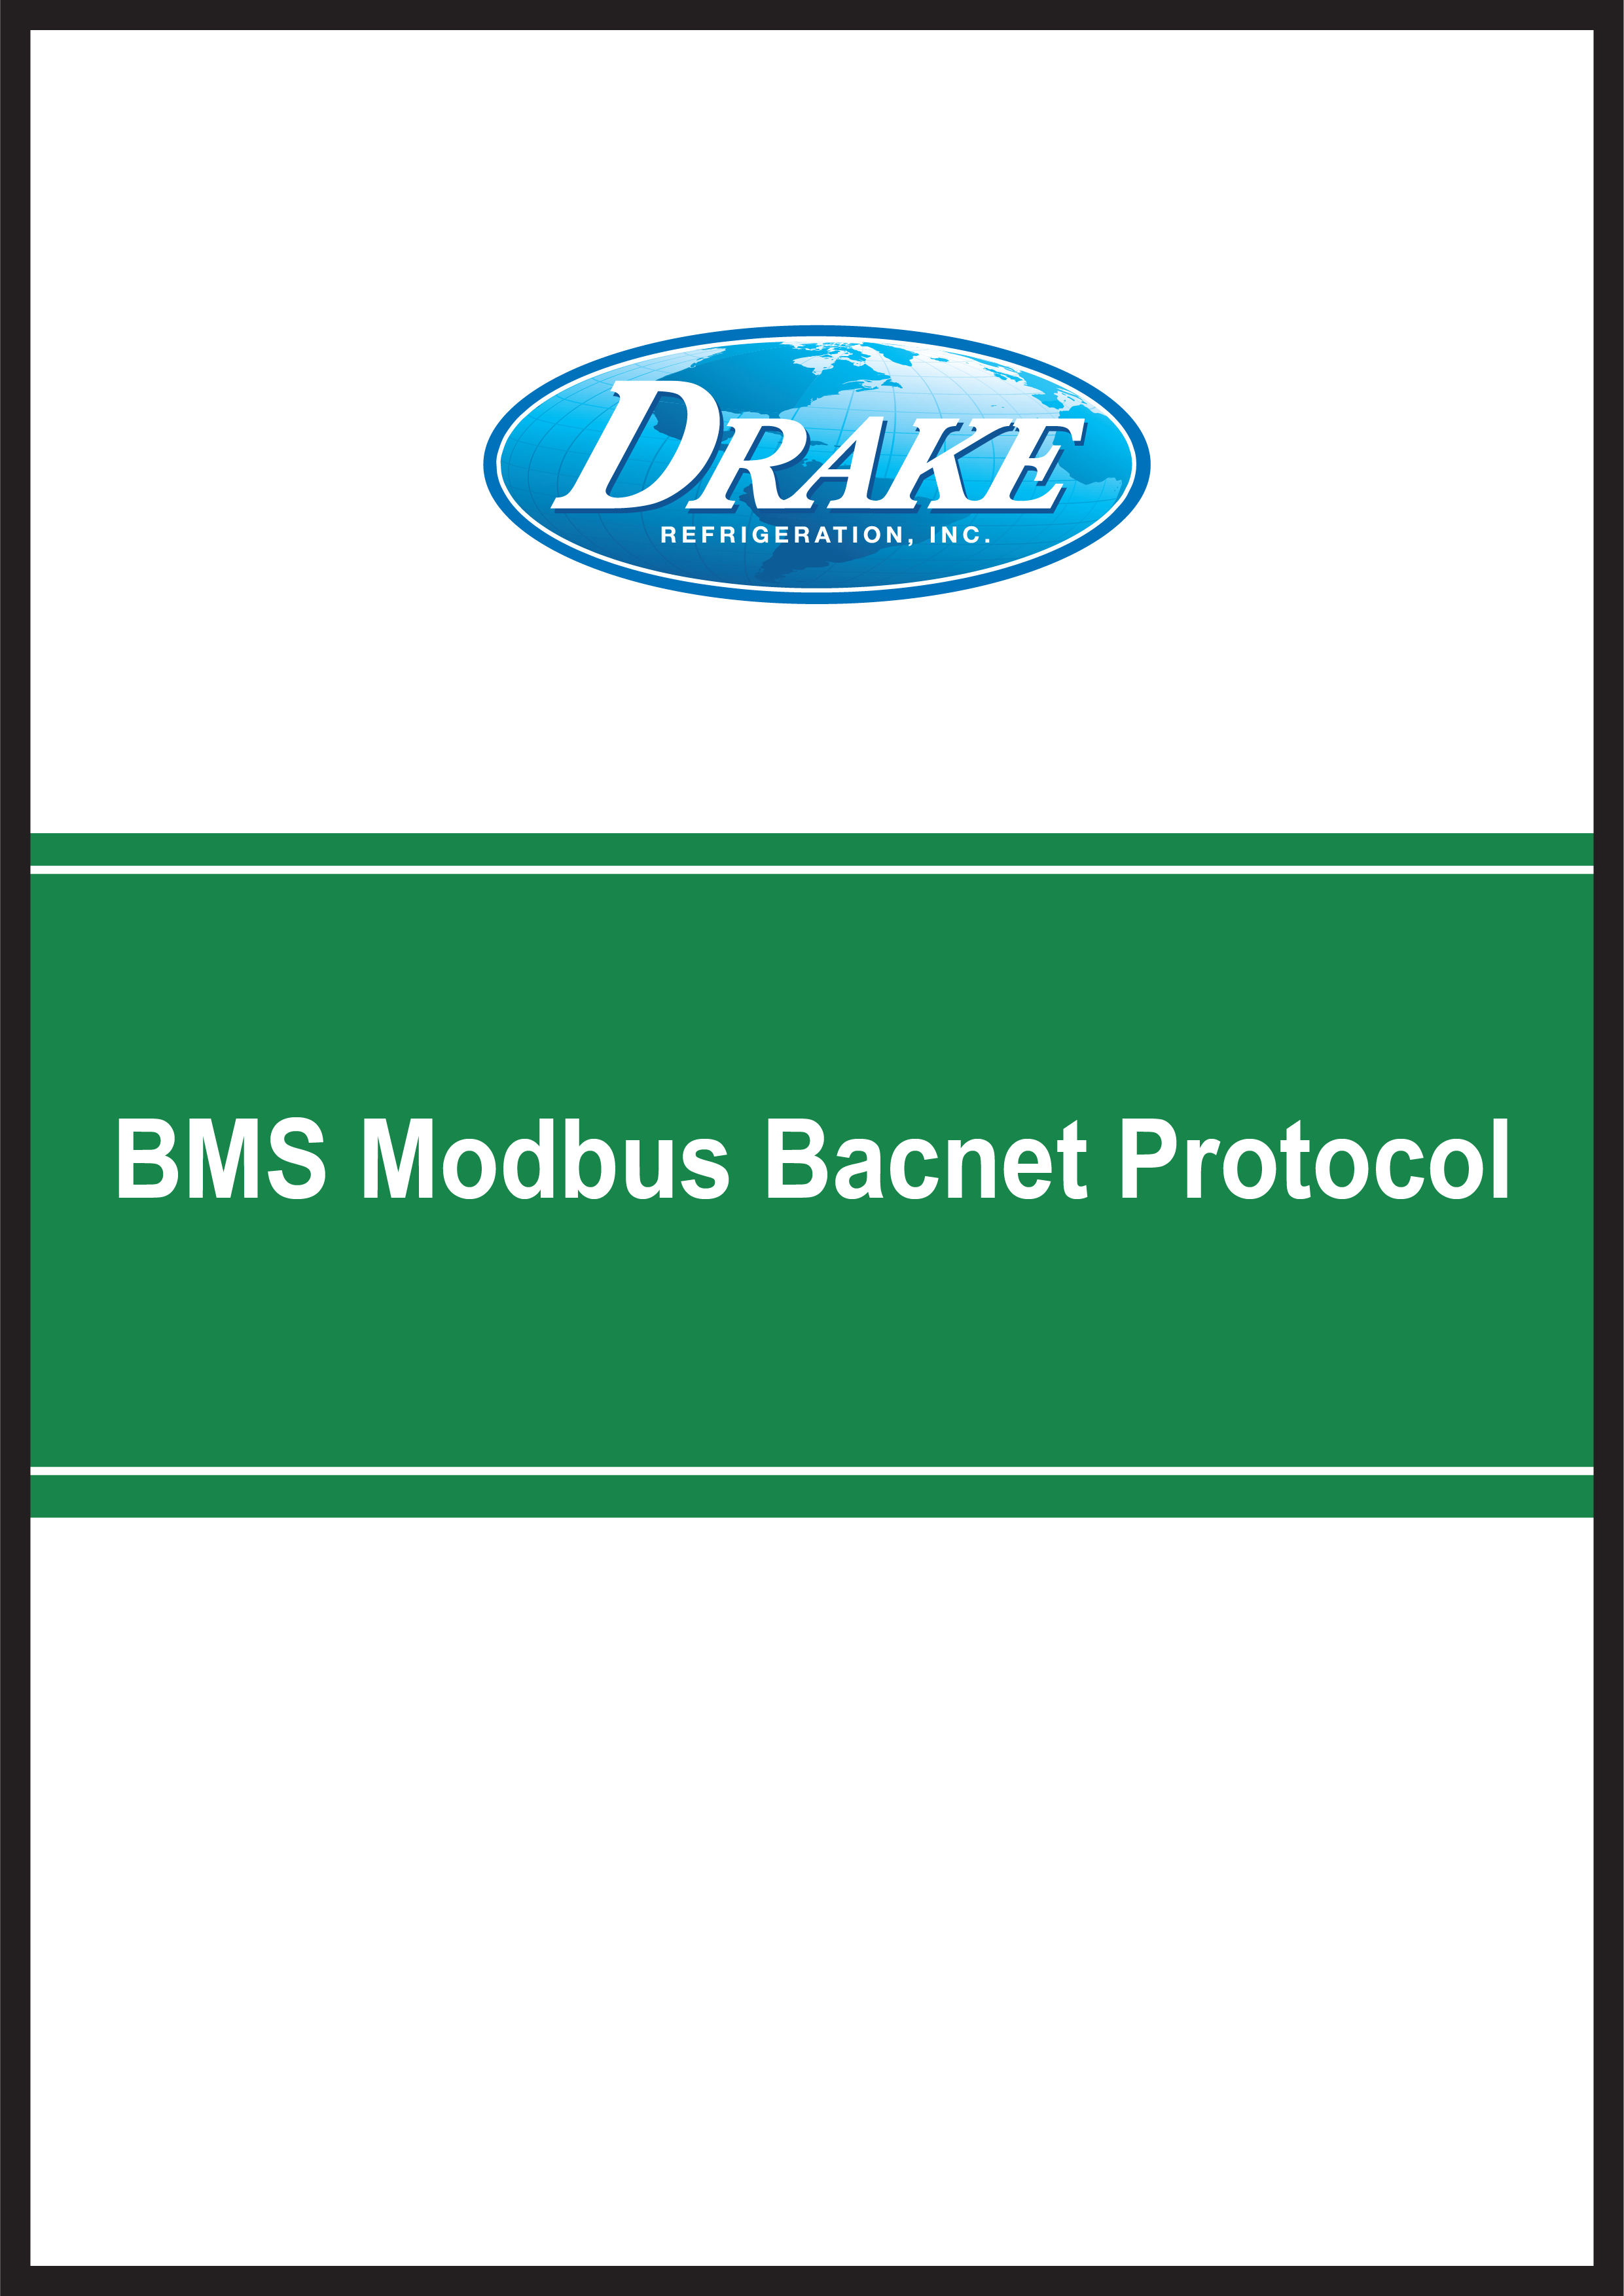 Web Template BMS Modbus Bacnet Protocol.png